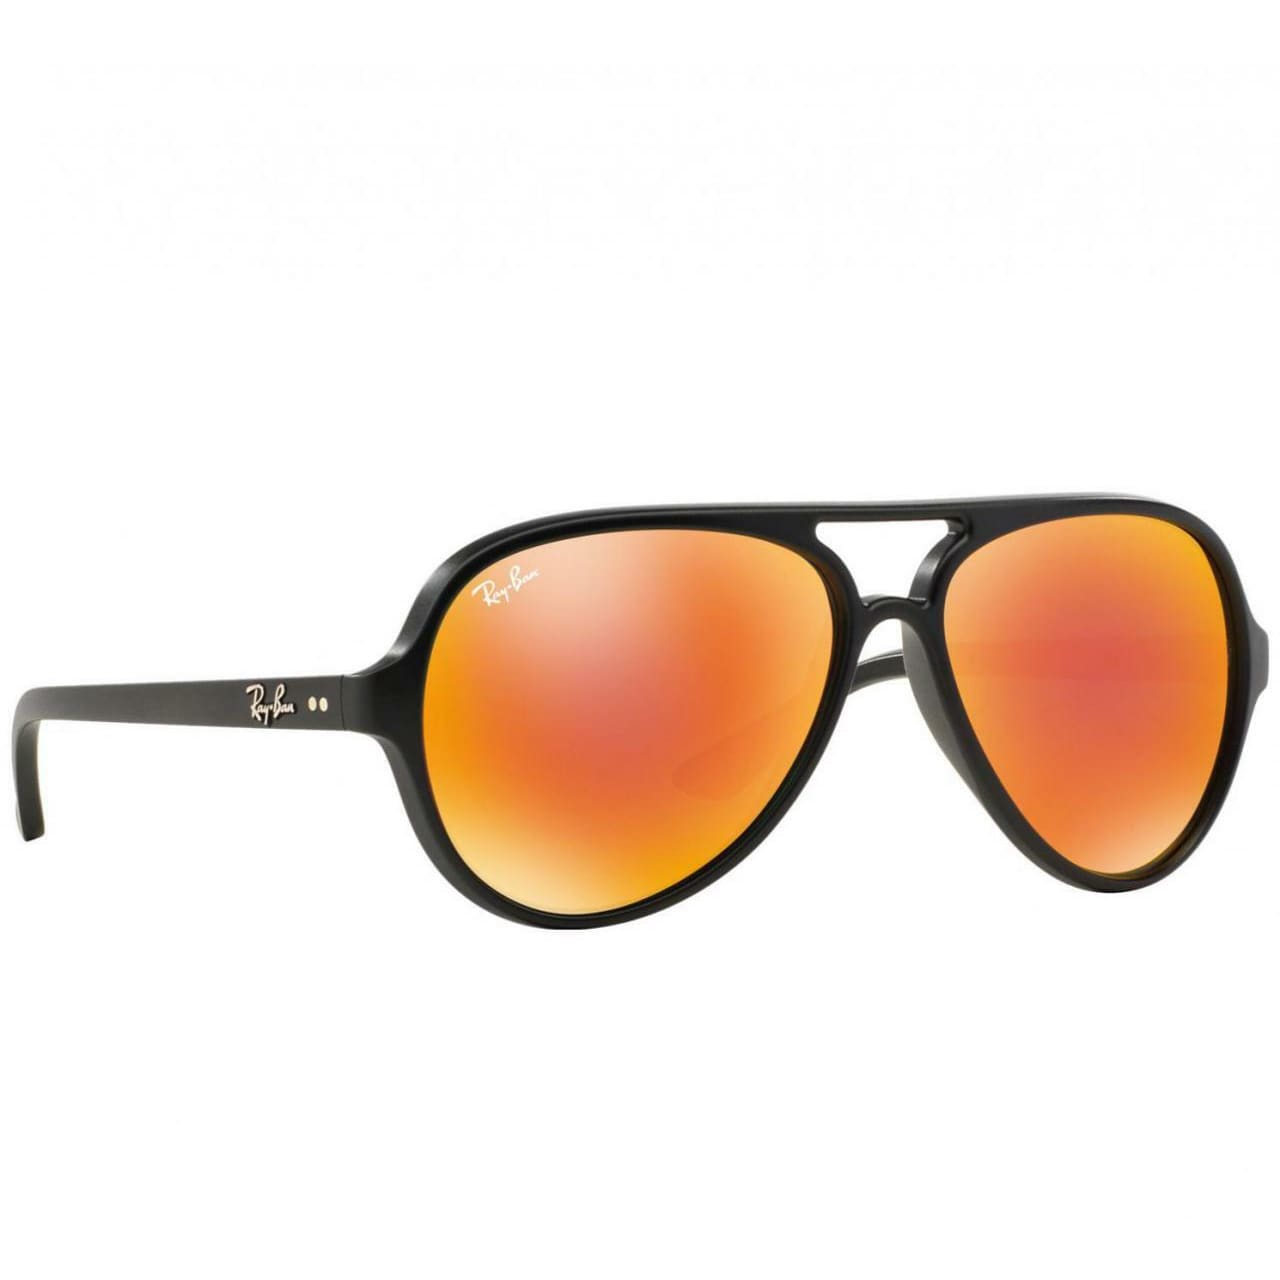 Ray-Ban RB4125 601S69 Cats 5000 Orange Flash Lenses Black Frame Pilot Sunglasses 8053672401639